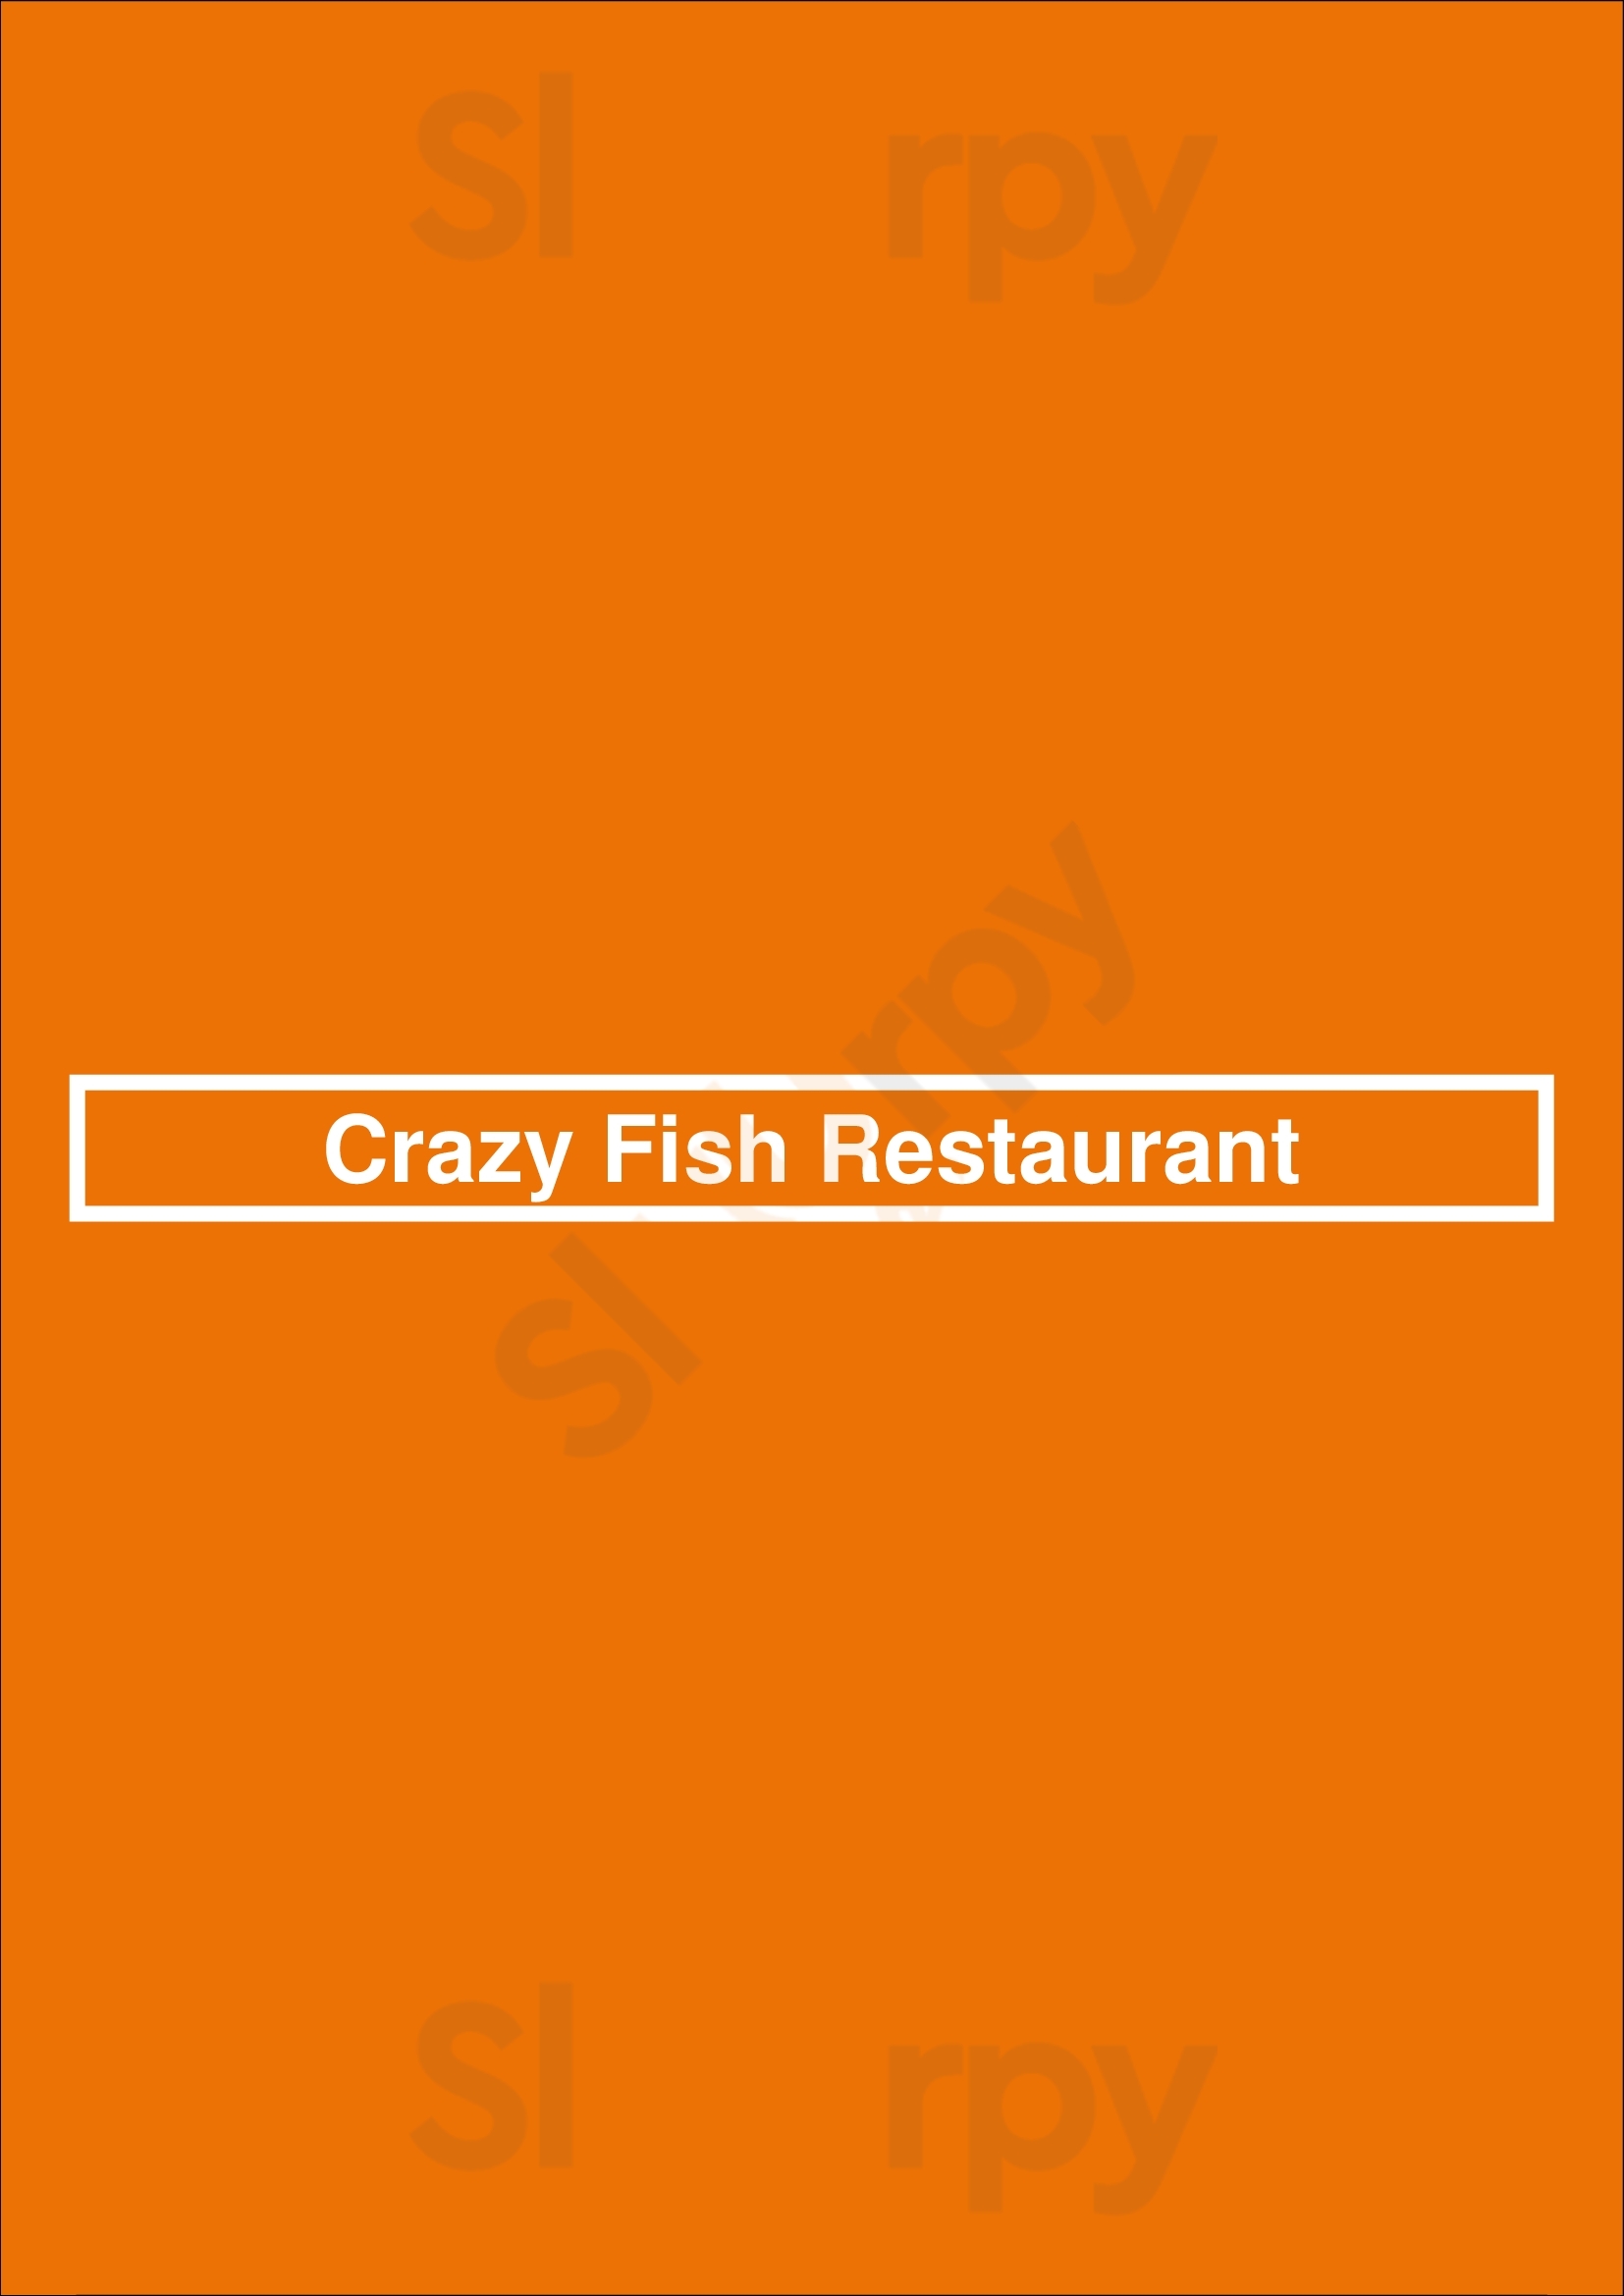 Crazy Fish Restaurant Albuquerque Menu - 1